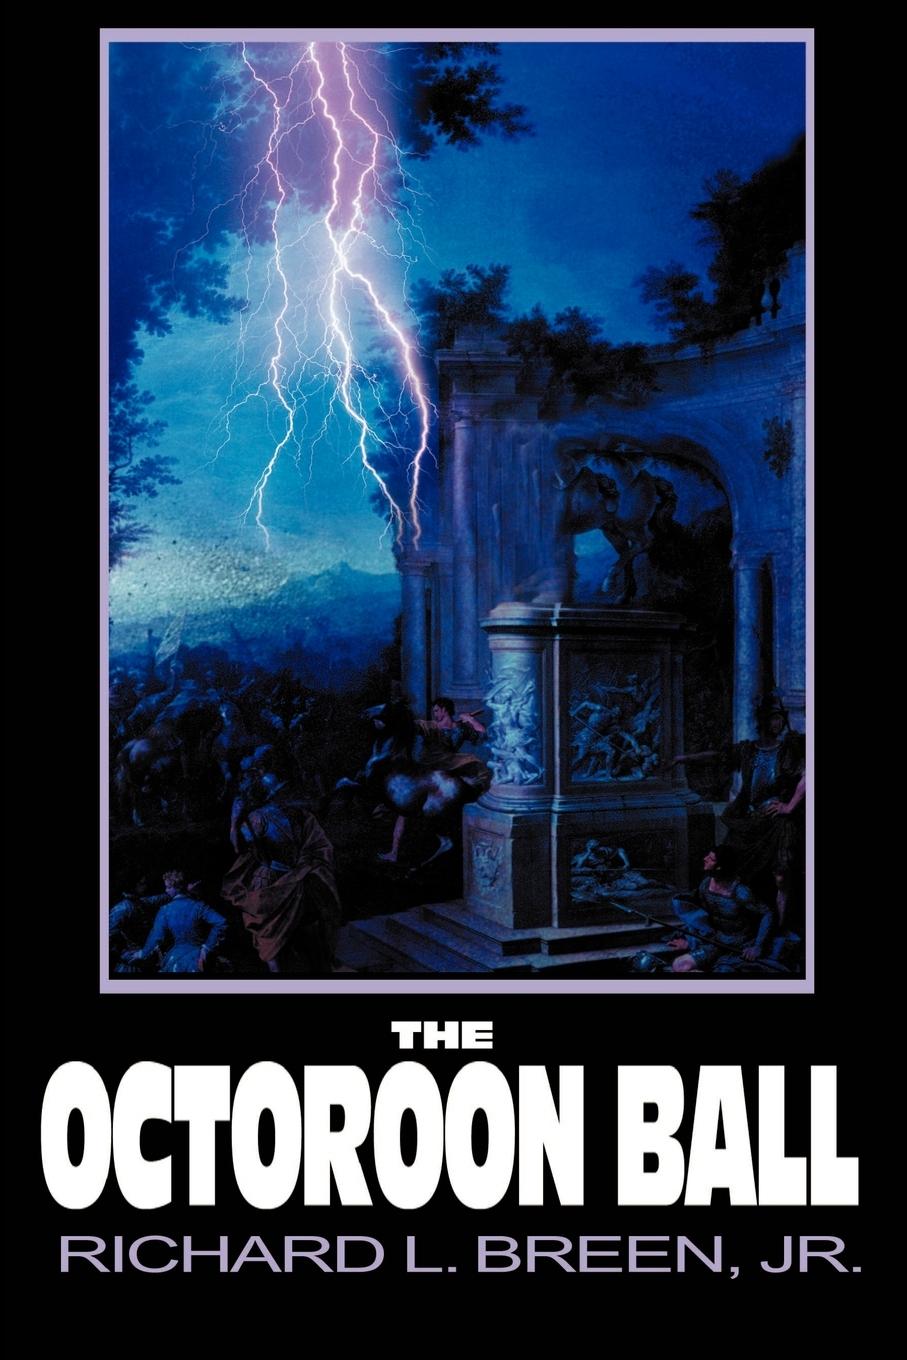 Octoroon Ball, The